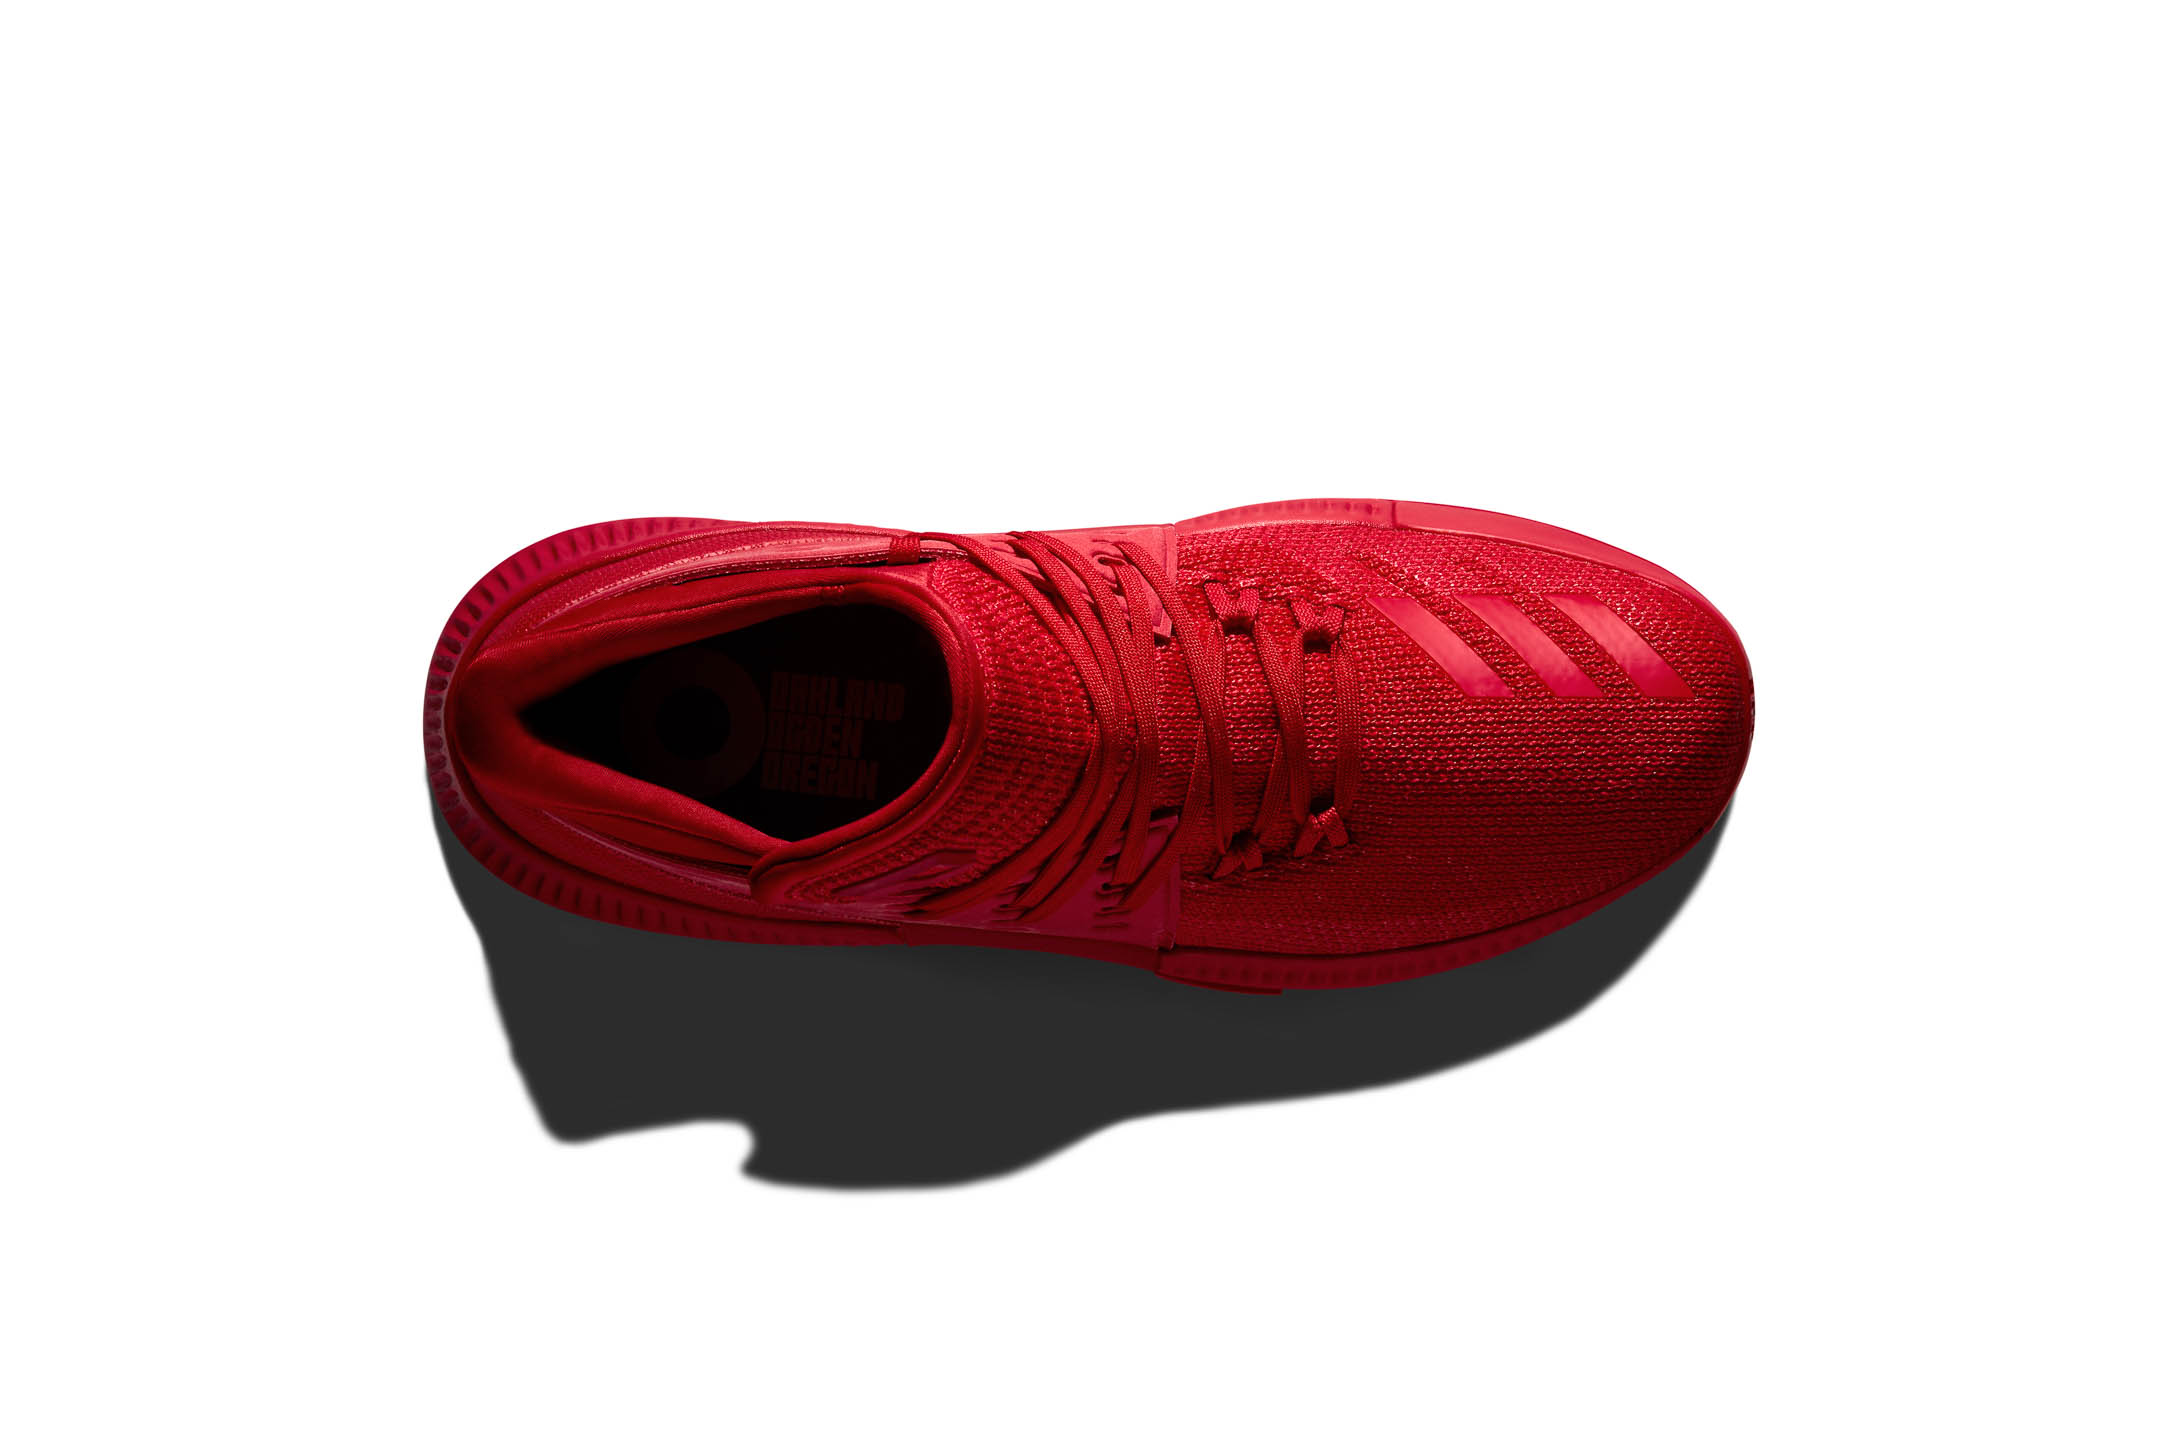 Adidas DLillard3 basketball shoe